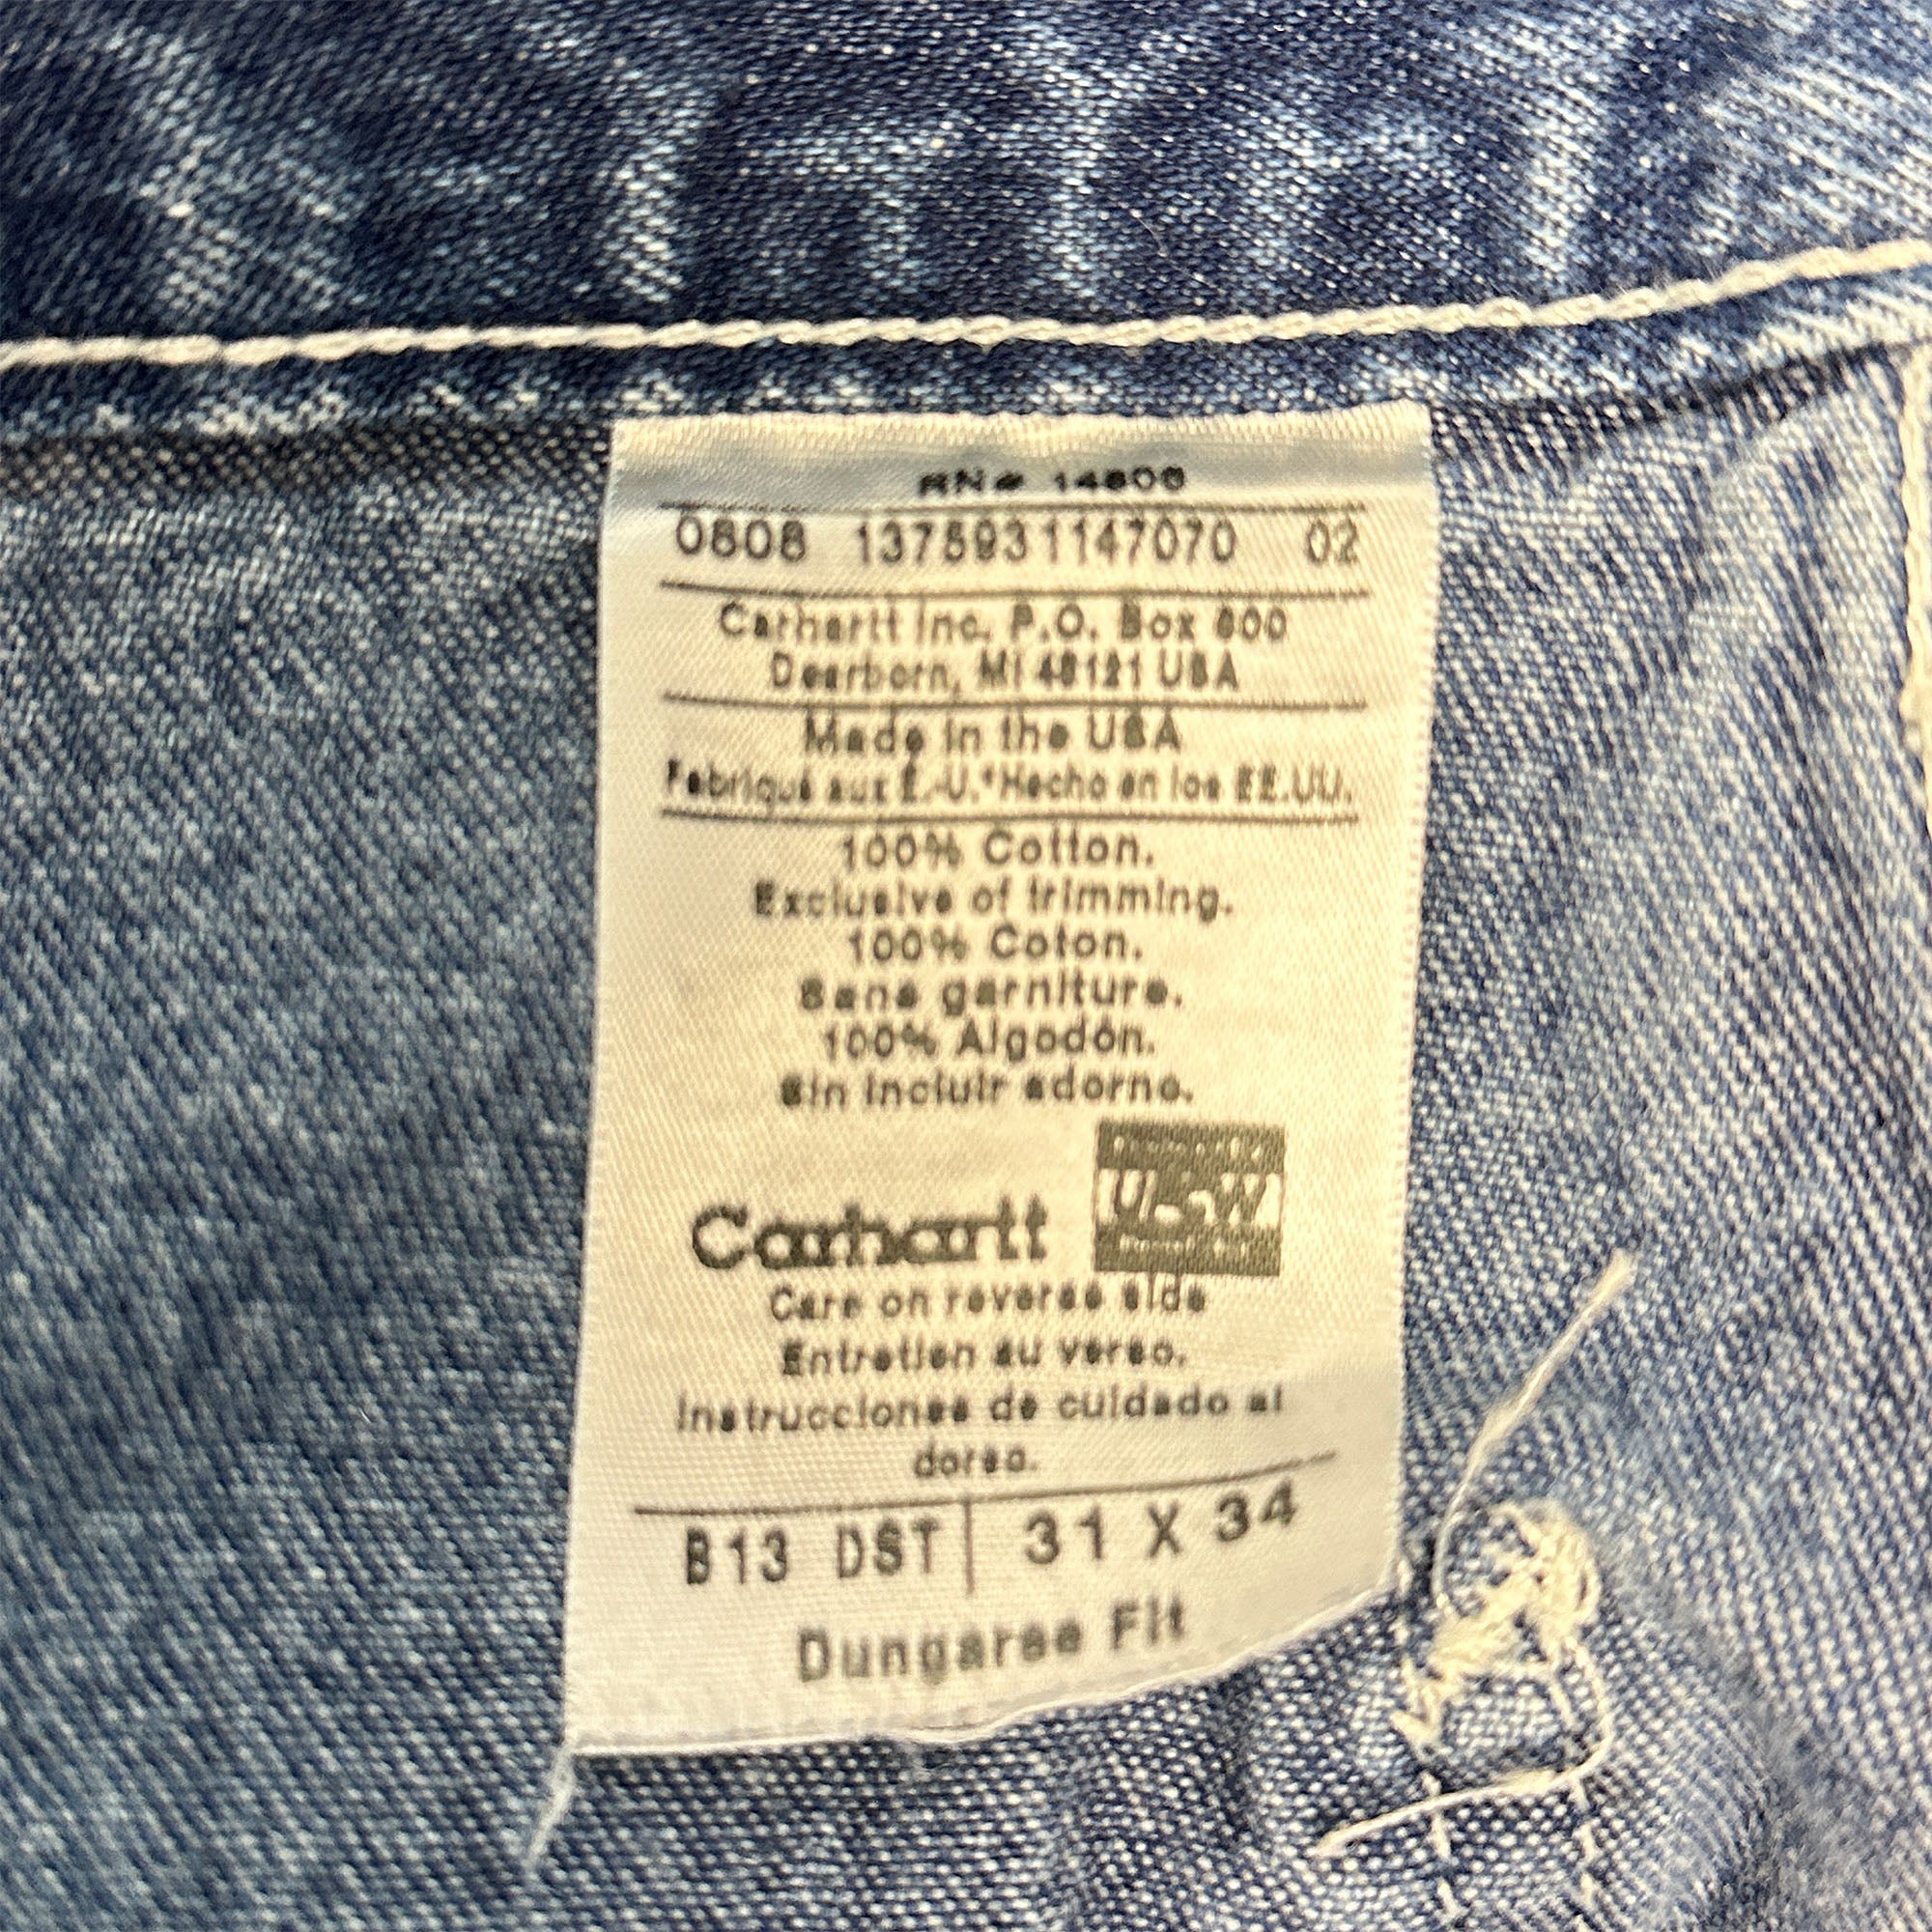 Men's Carhartt B13 DST Carpenter Jeans - Measures 30x33-4